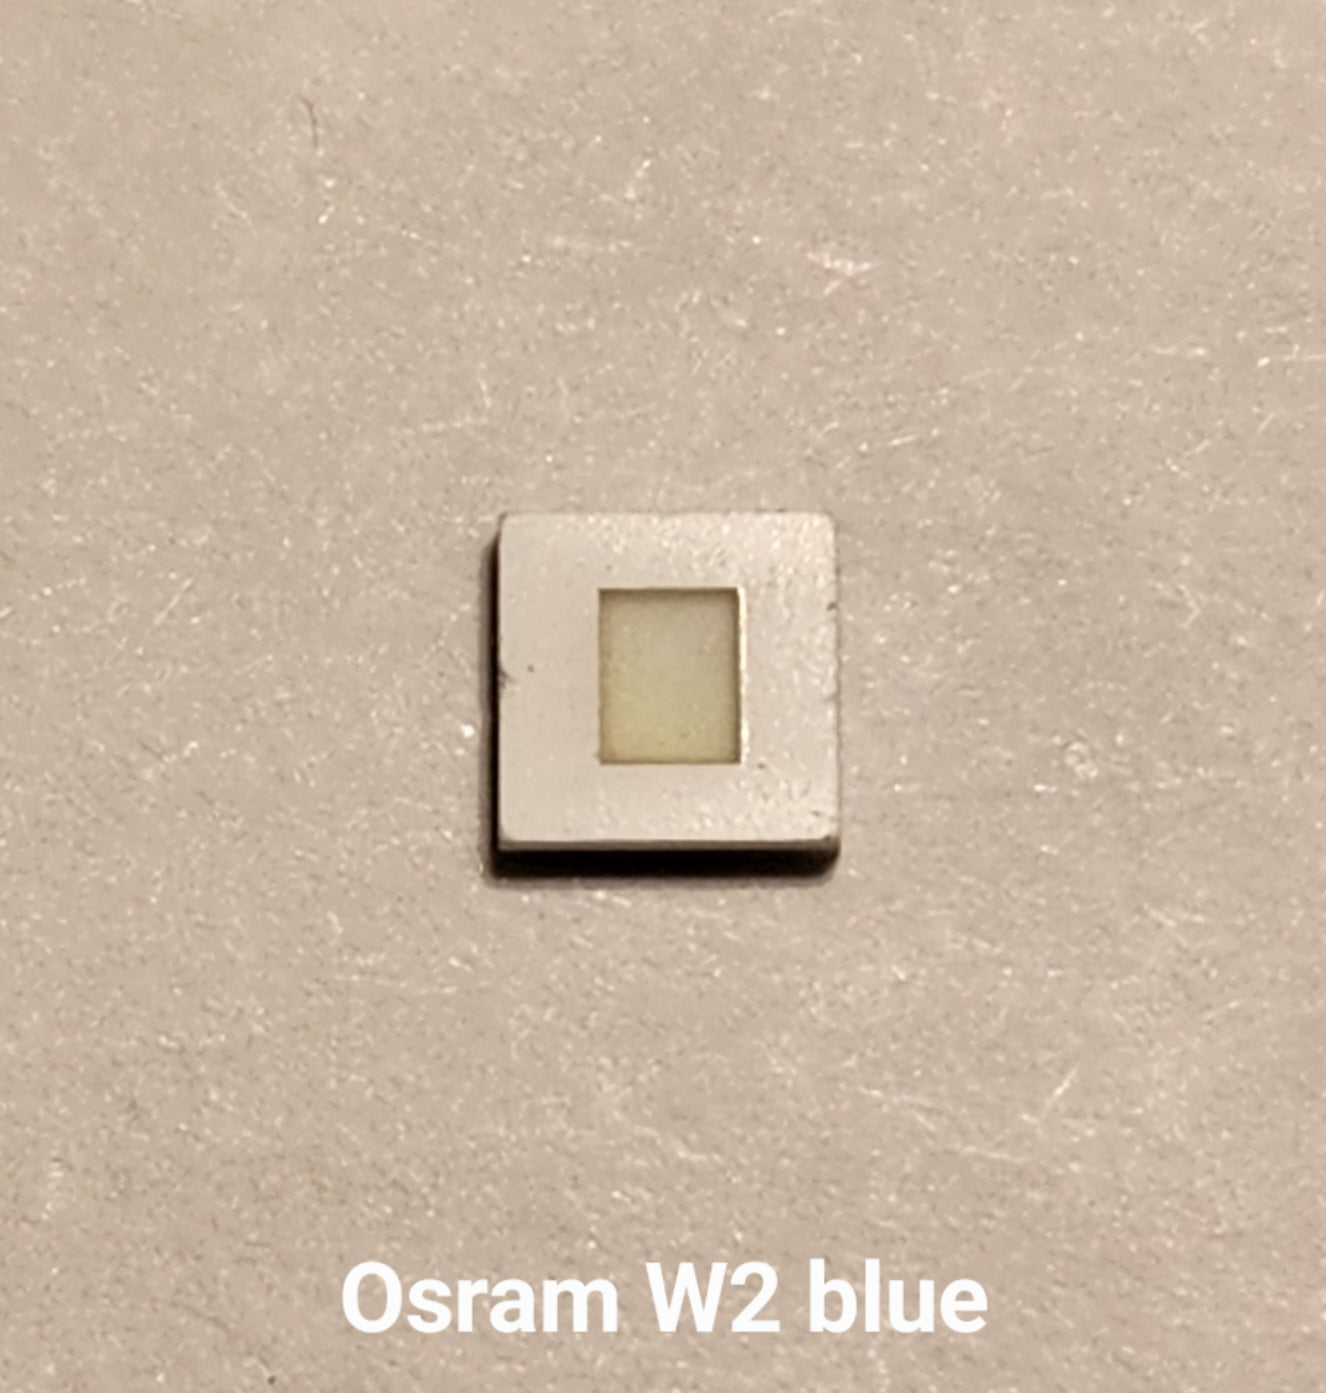 Osram W1 W2 3030 SMD Raw LED Emitters W2 BLUE (USED)